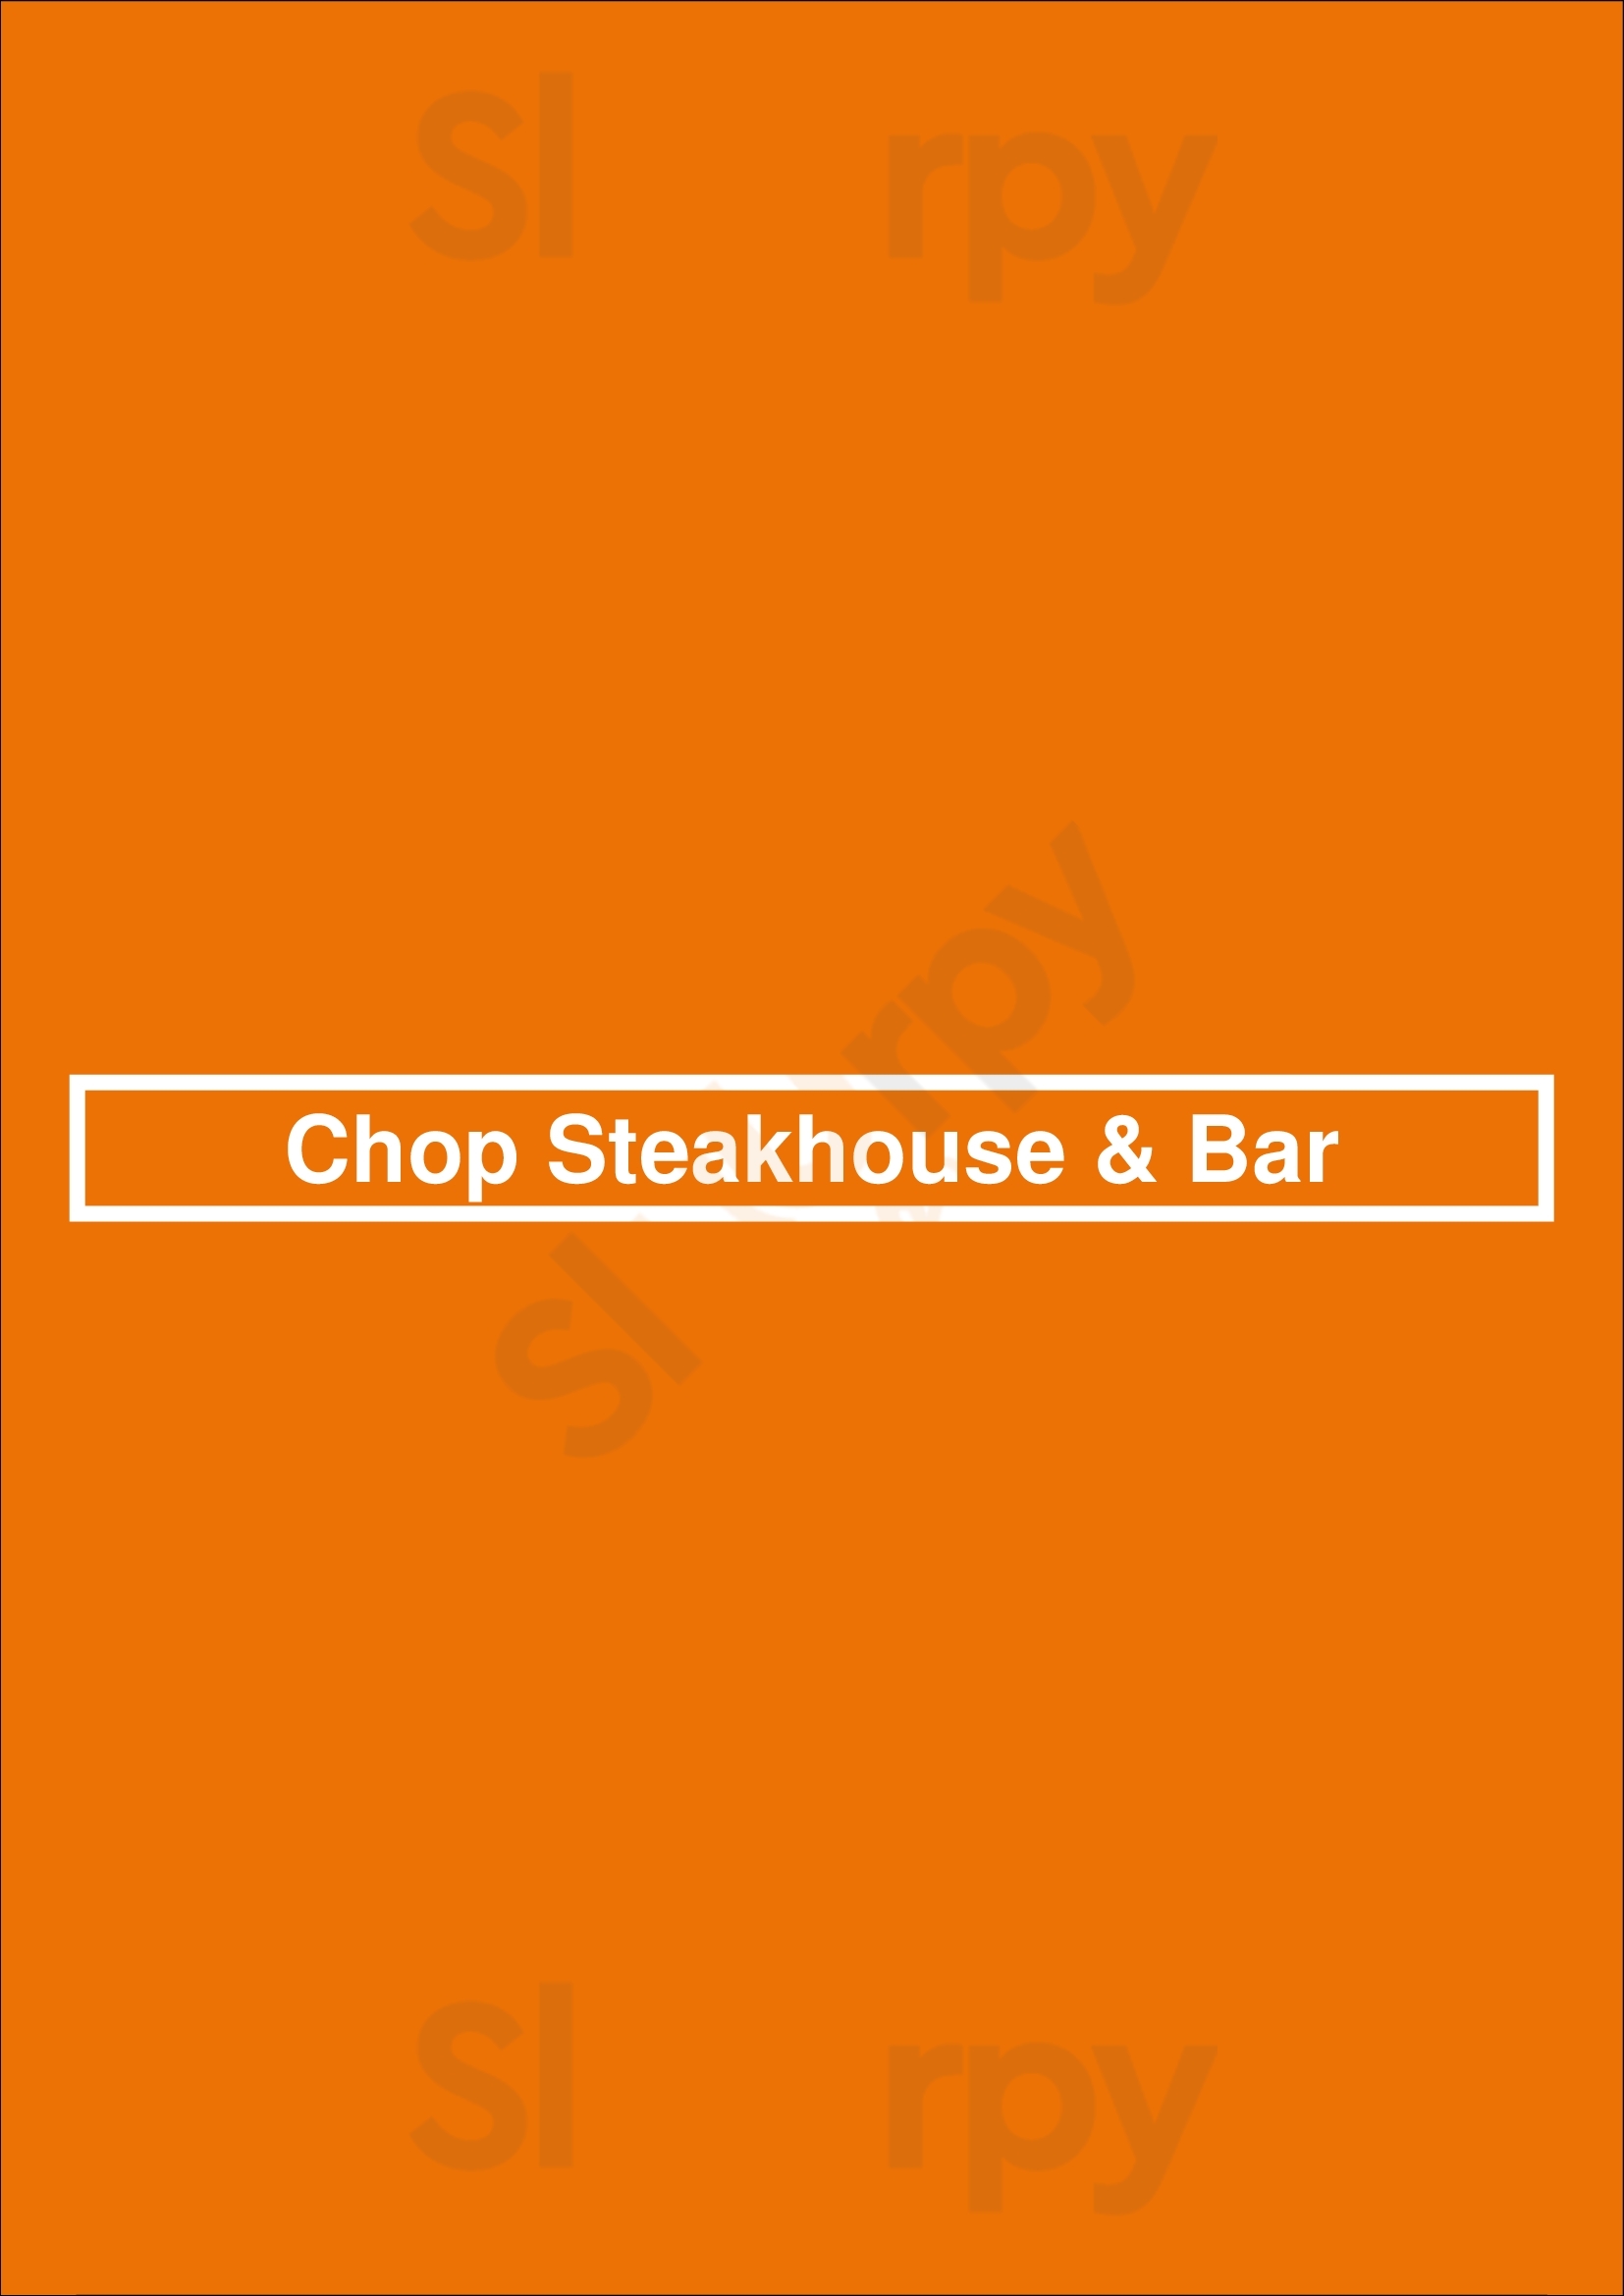 Chop Steakhouse & Bar Oakville Menu - 1